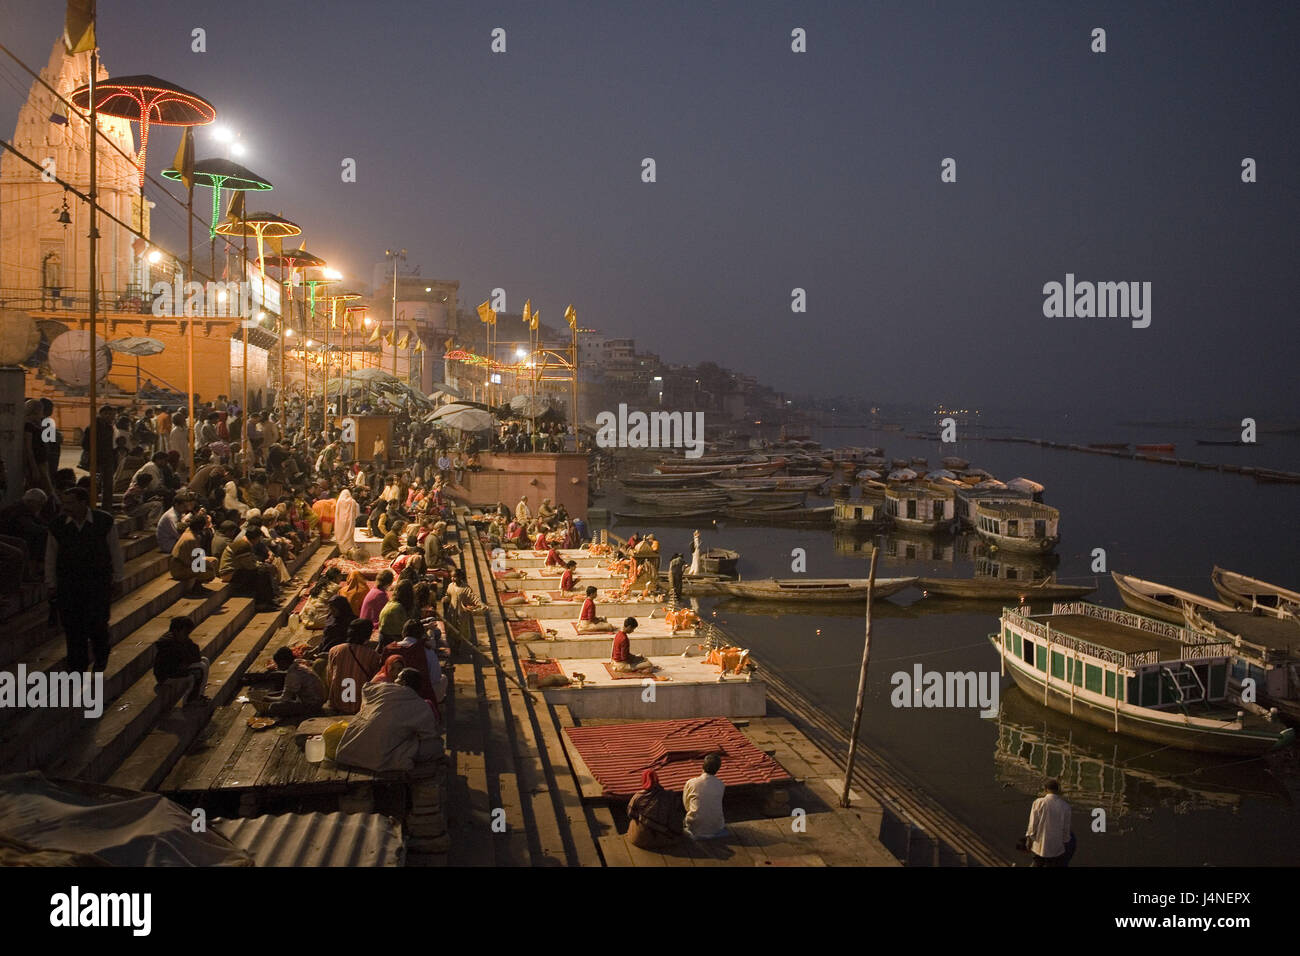 India, Uttar Pradesh, Benares, Dasawamedh Ghat, lighting, believers, evening, Stock Photo